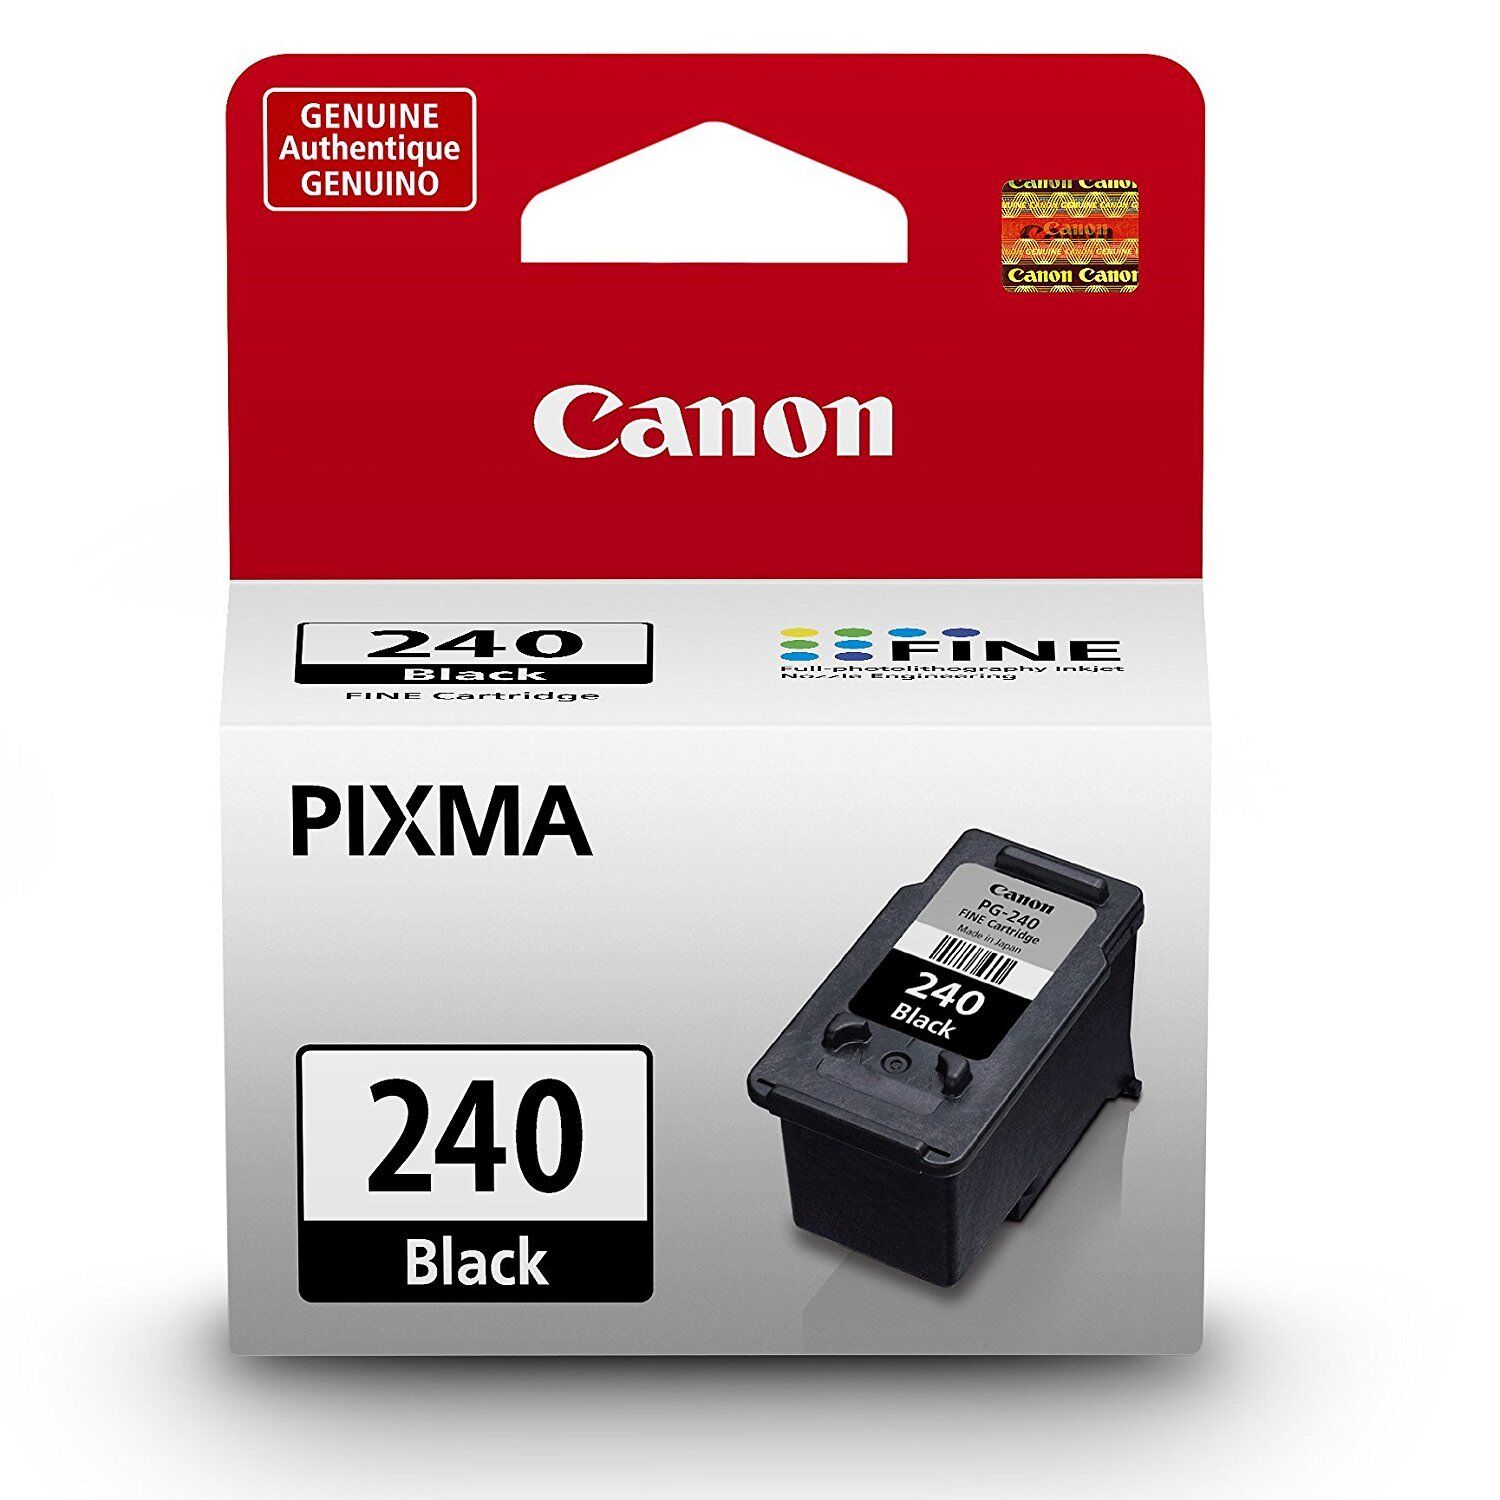 Genuine Canon PG-240 Black Ink Cartridge (5207B001) - Canon Authorized Dealer